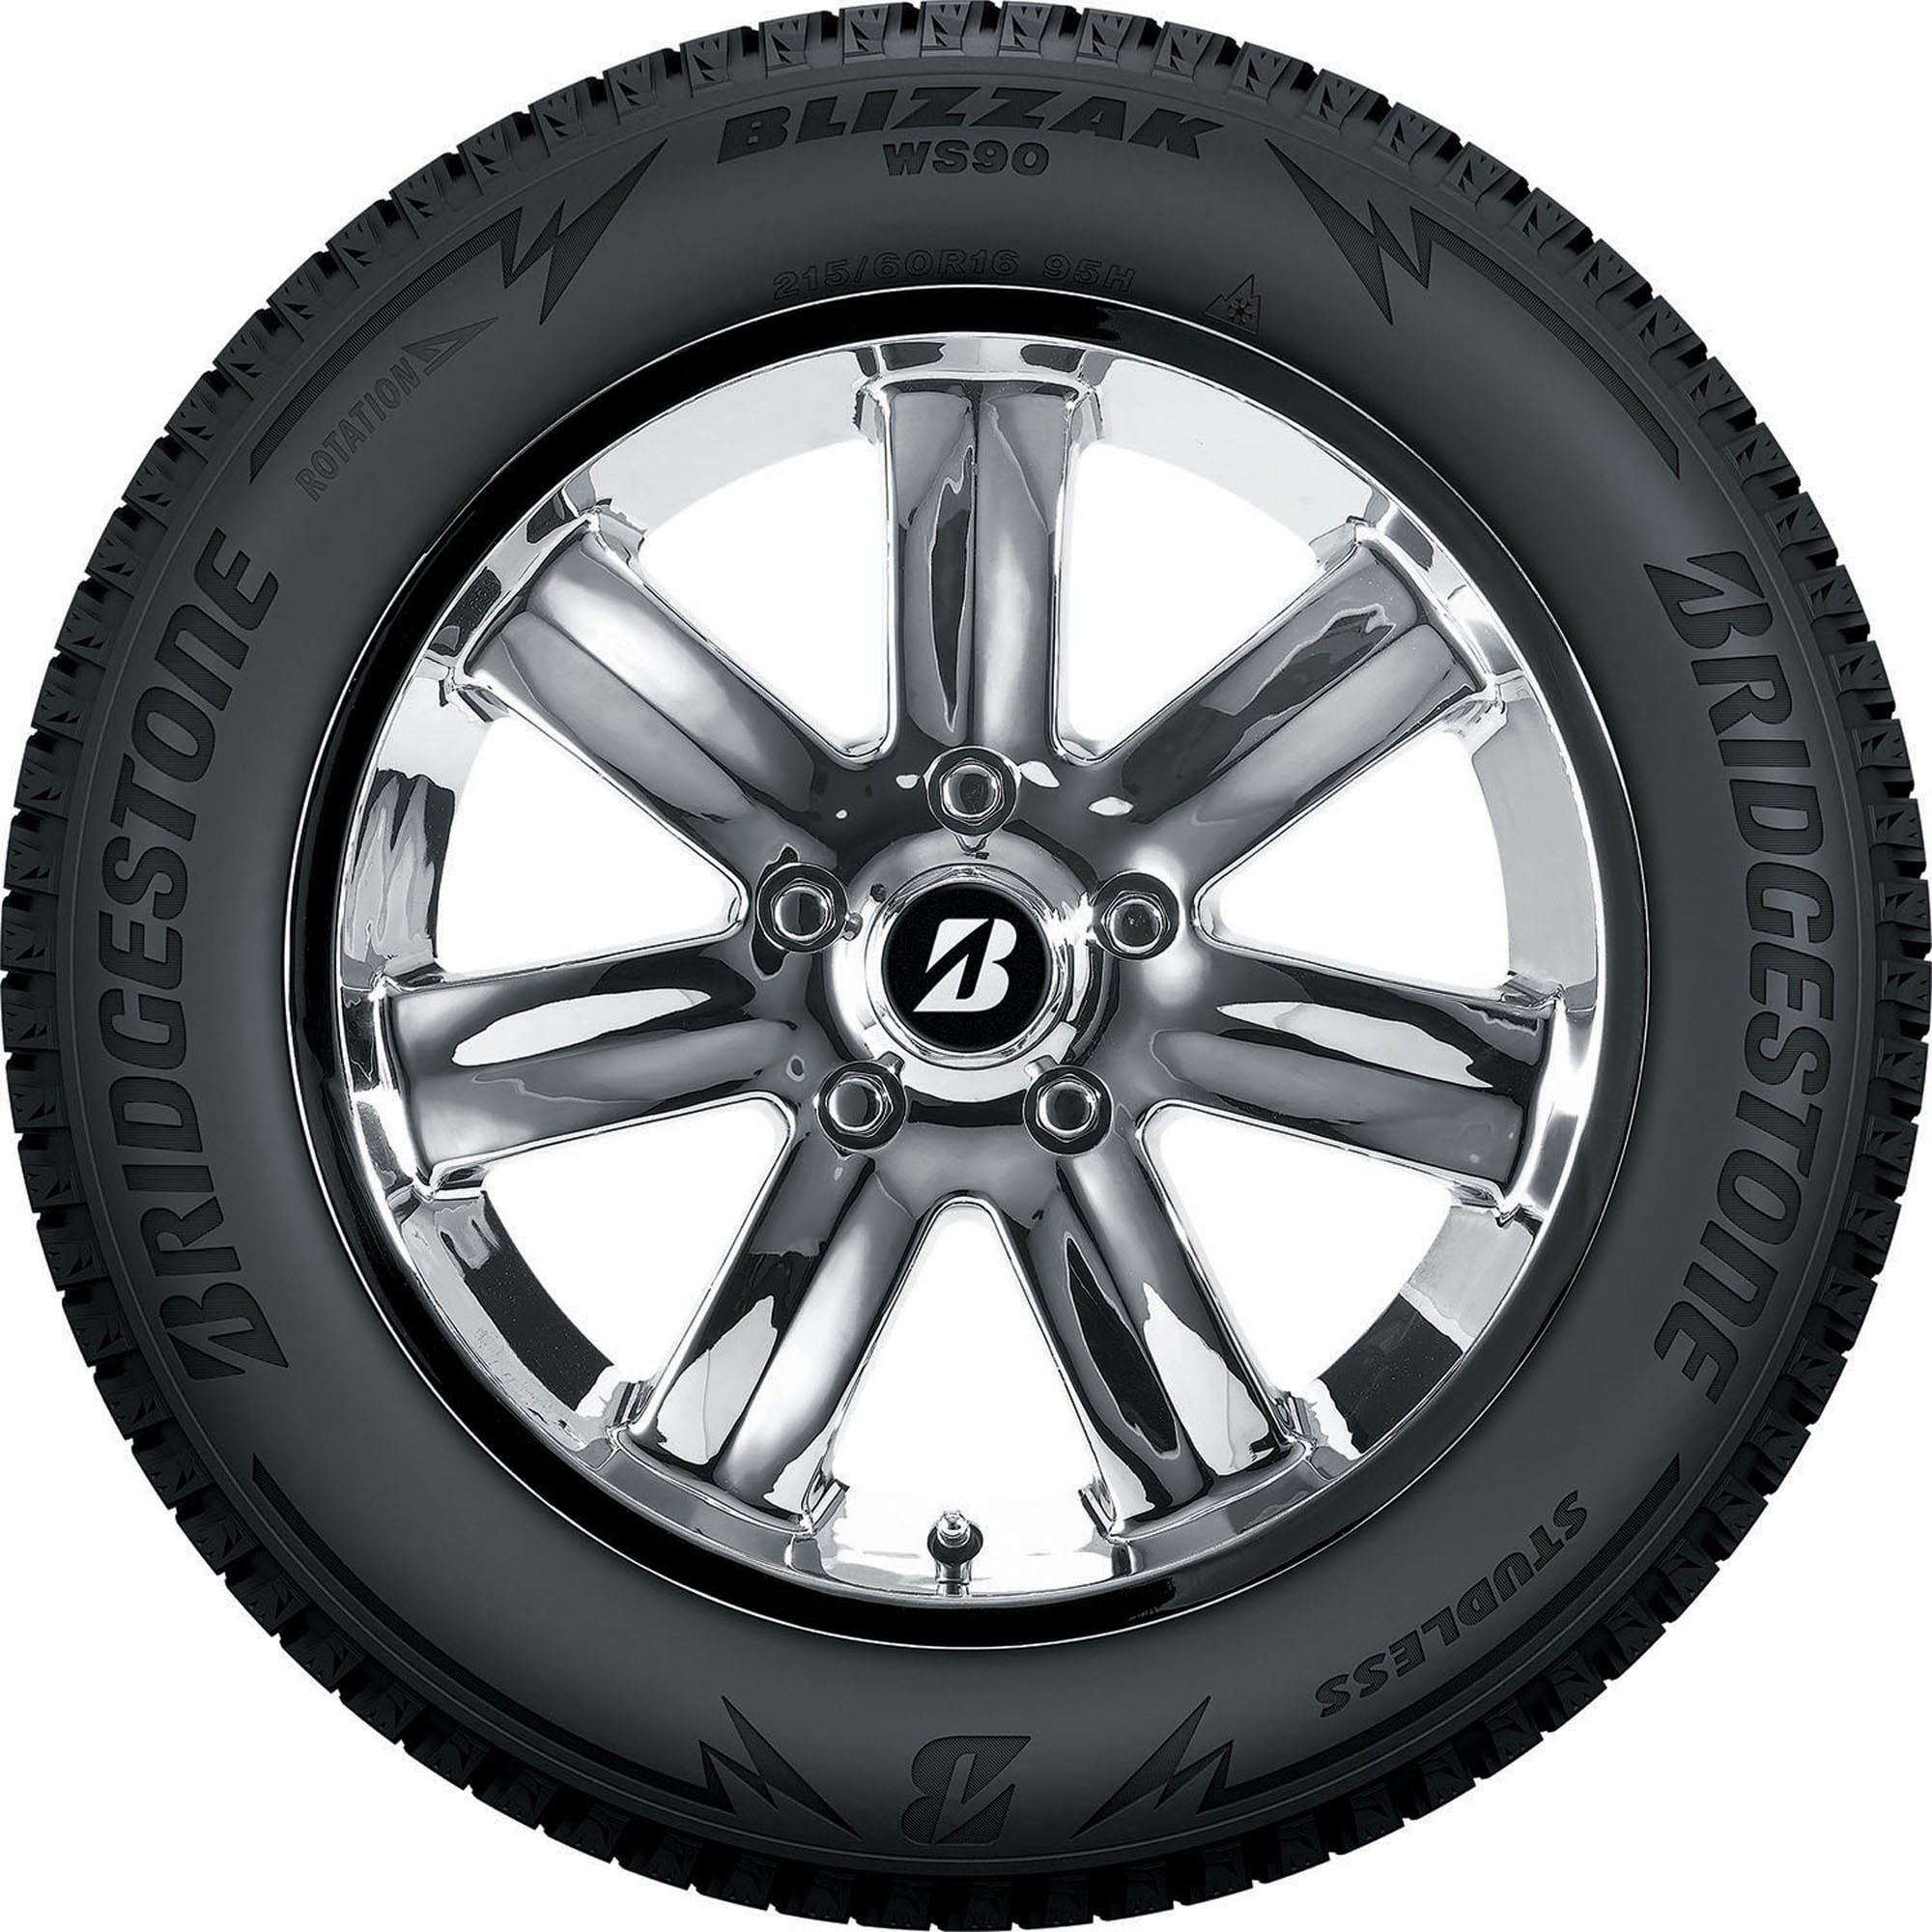 Bridgestone Blizzak WS90 Winter 205/65R16 95T Passenger Tire Fits: 2016-21  Chevrolet Malibu L, 2012-13 Toyota Camry Hybrid LE